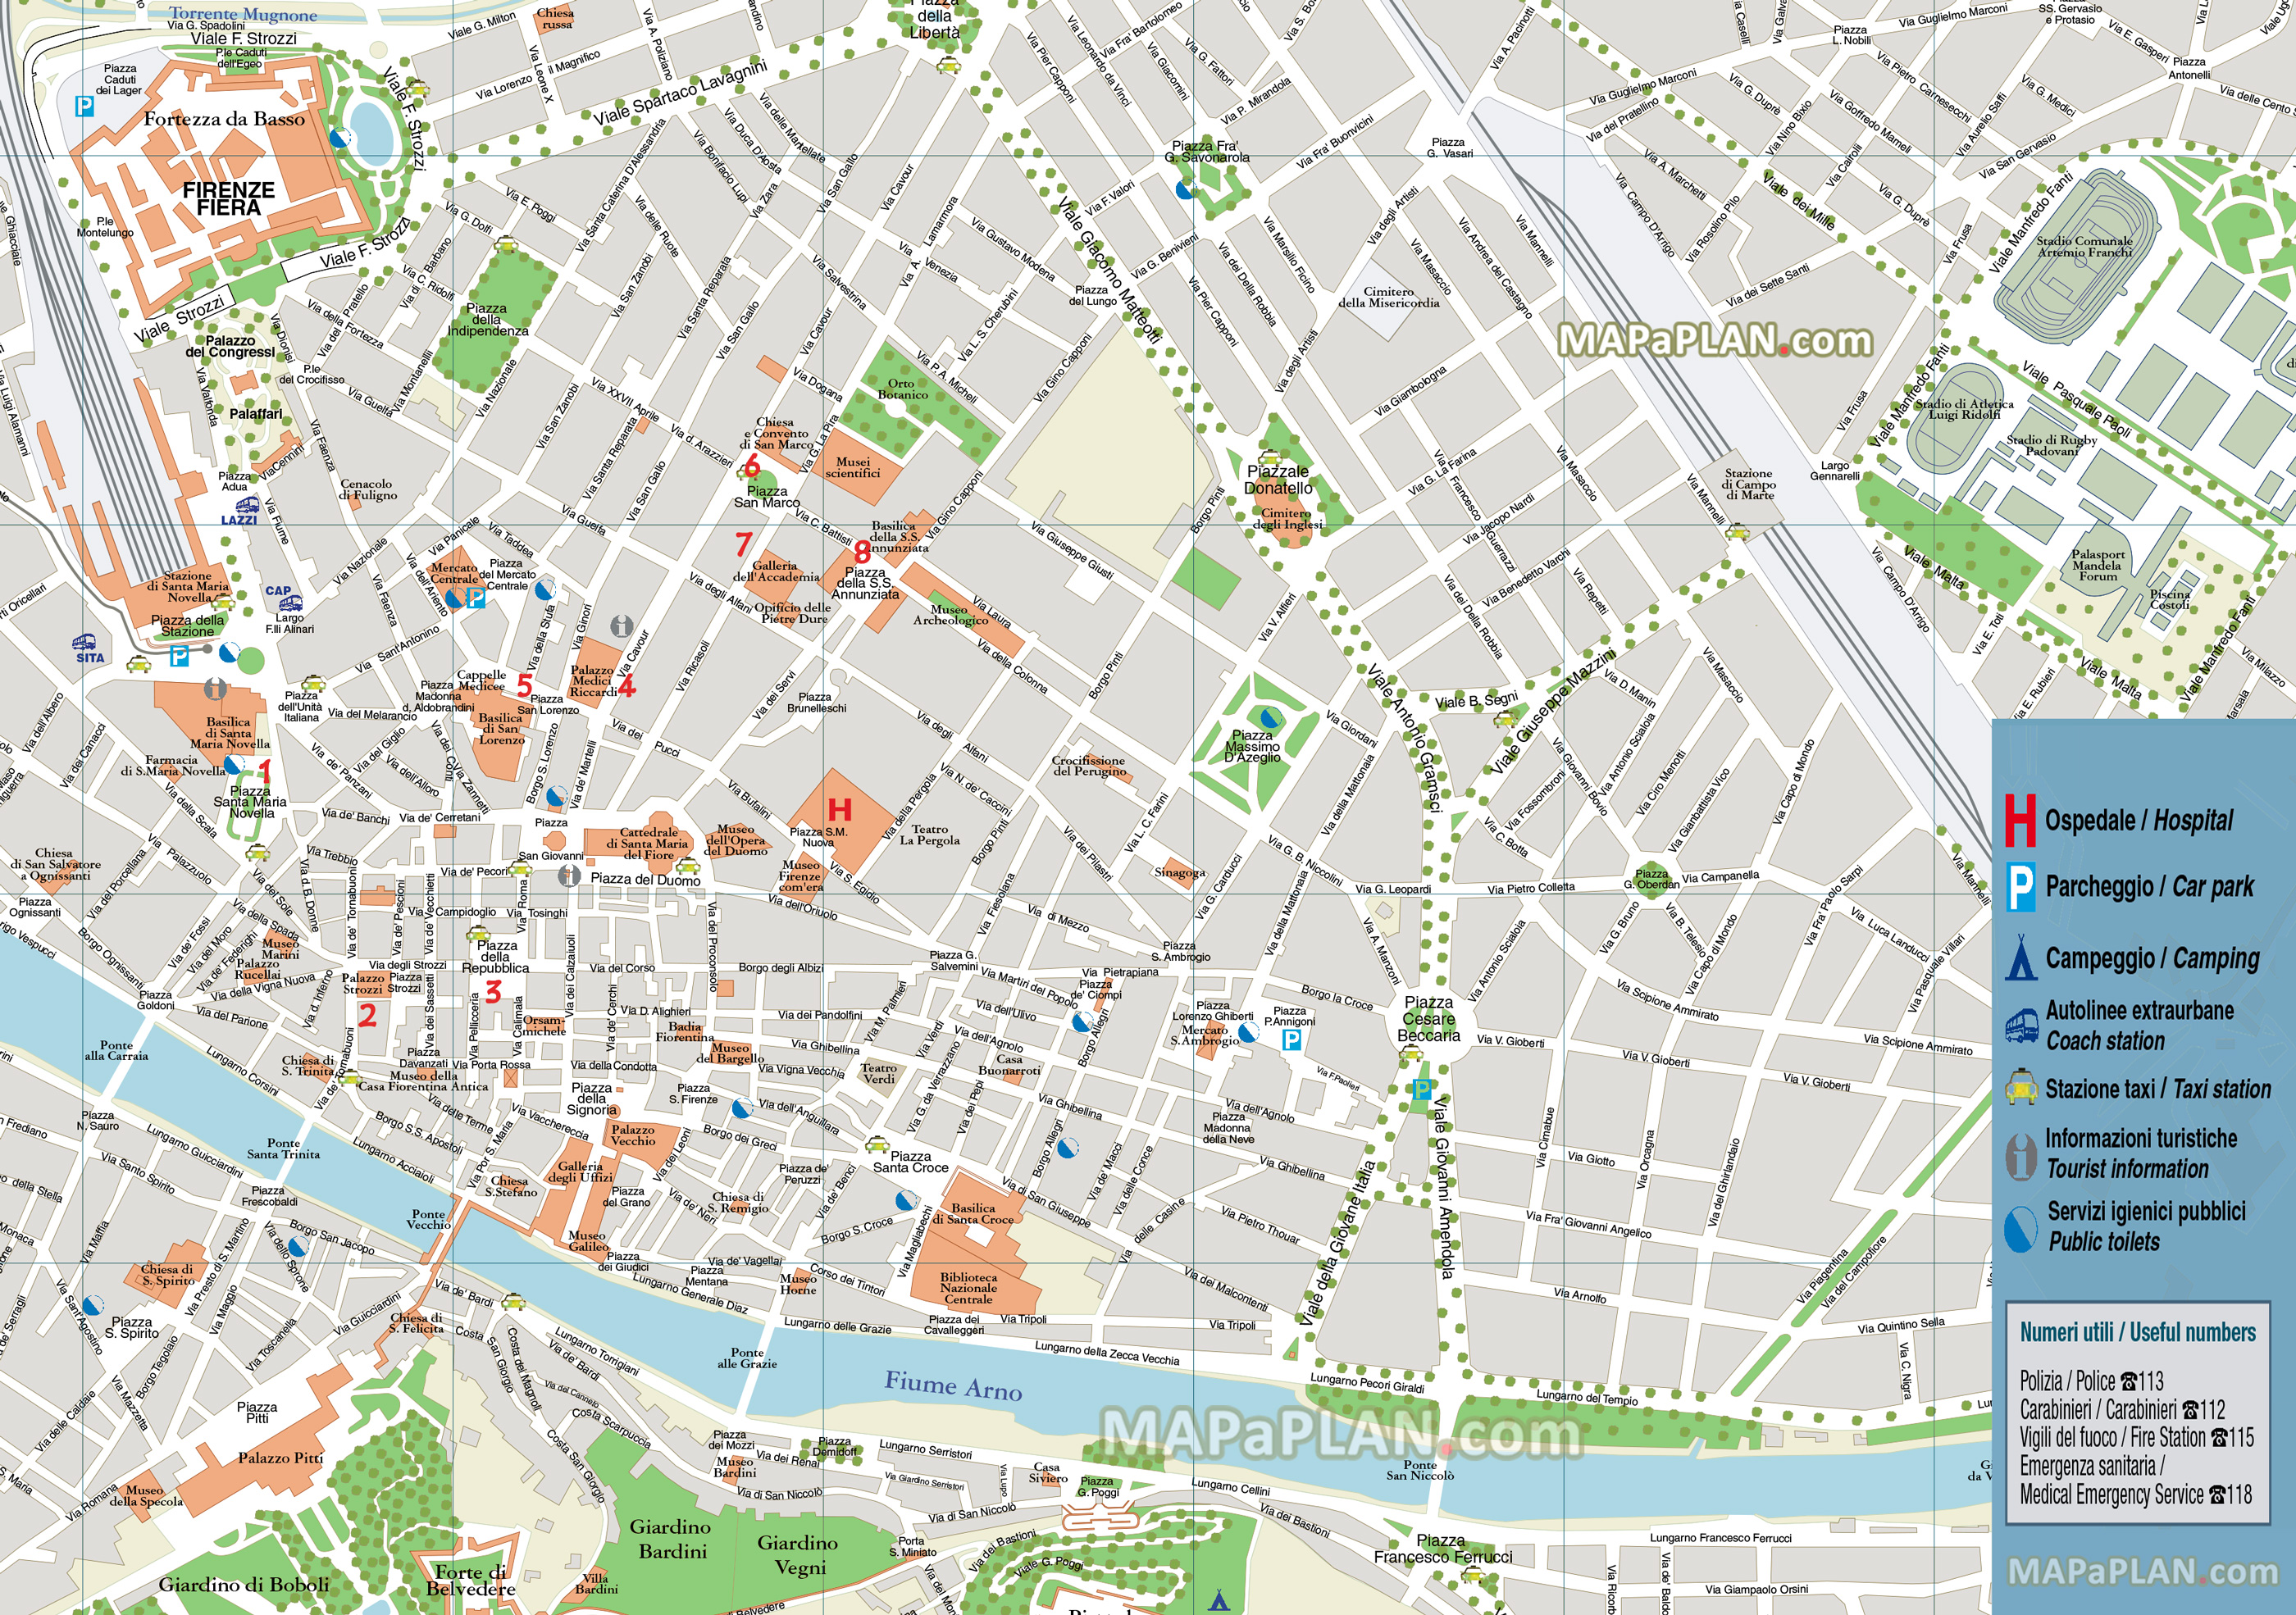 florence-map-tourist-information-visitor-centre-car-parks-hospitals